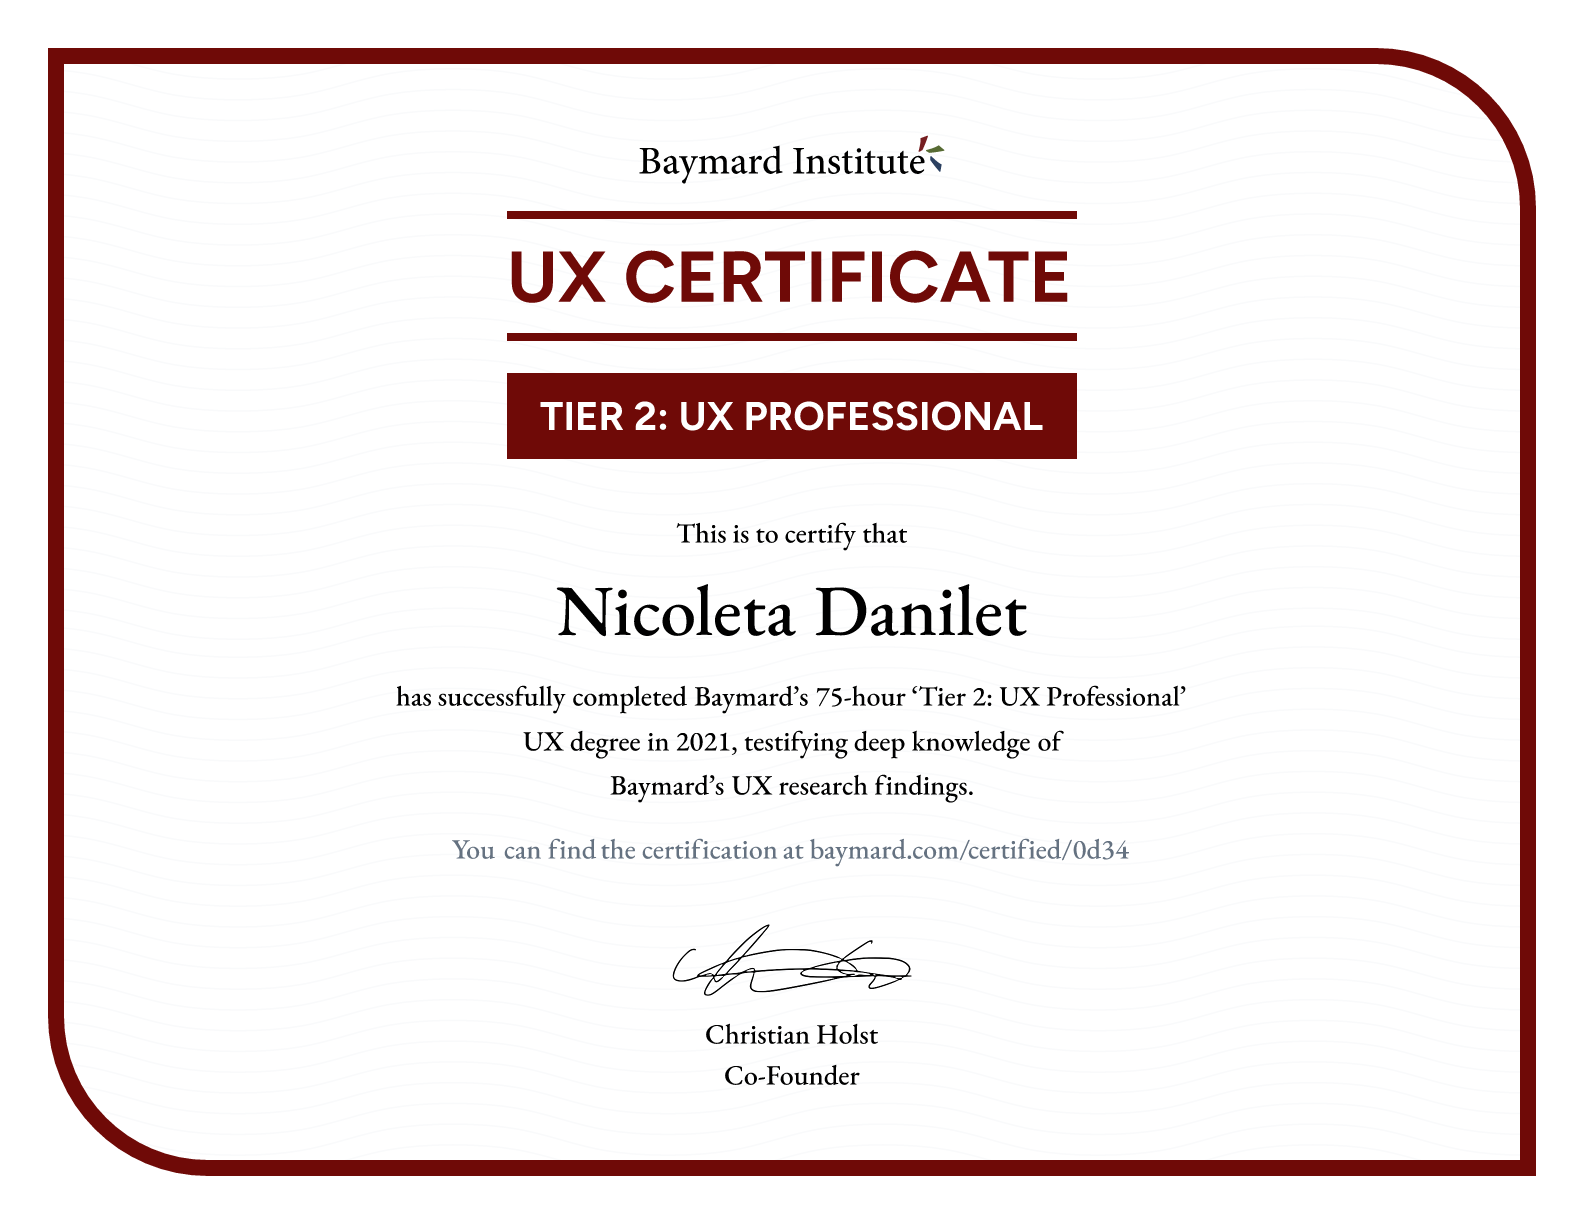 Nicoleta Danilet’s certificate